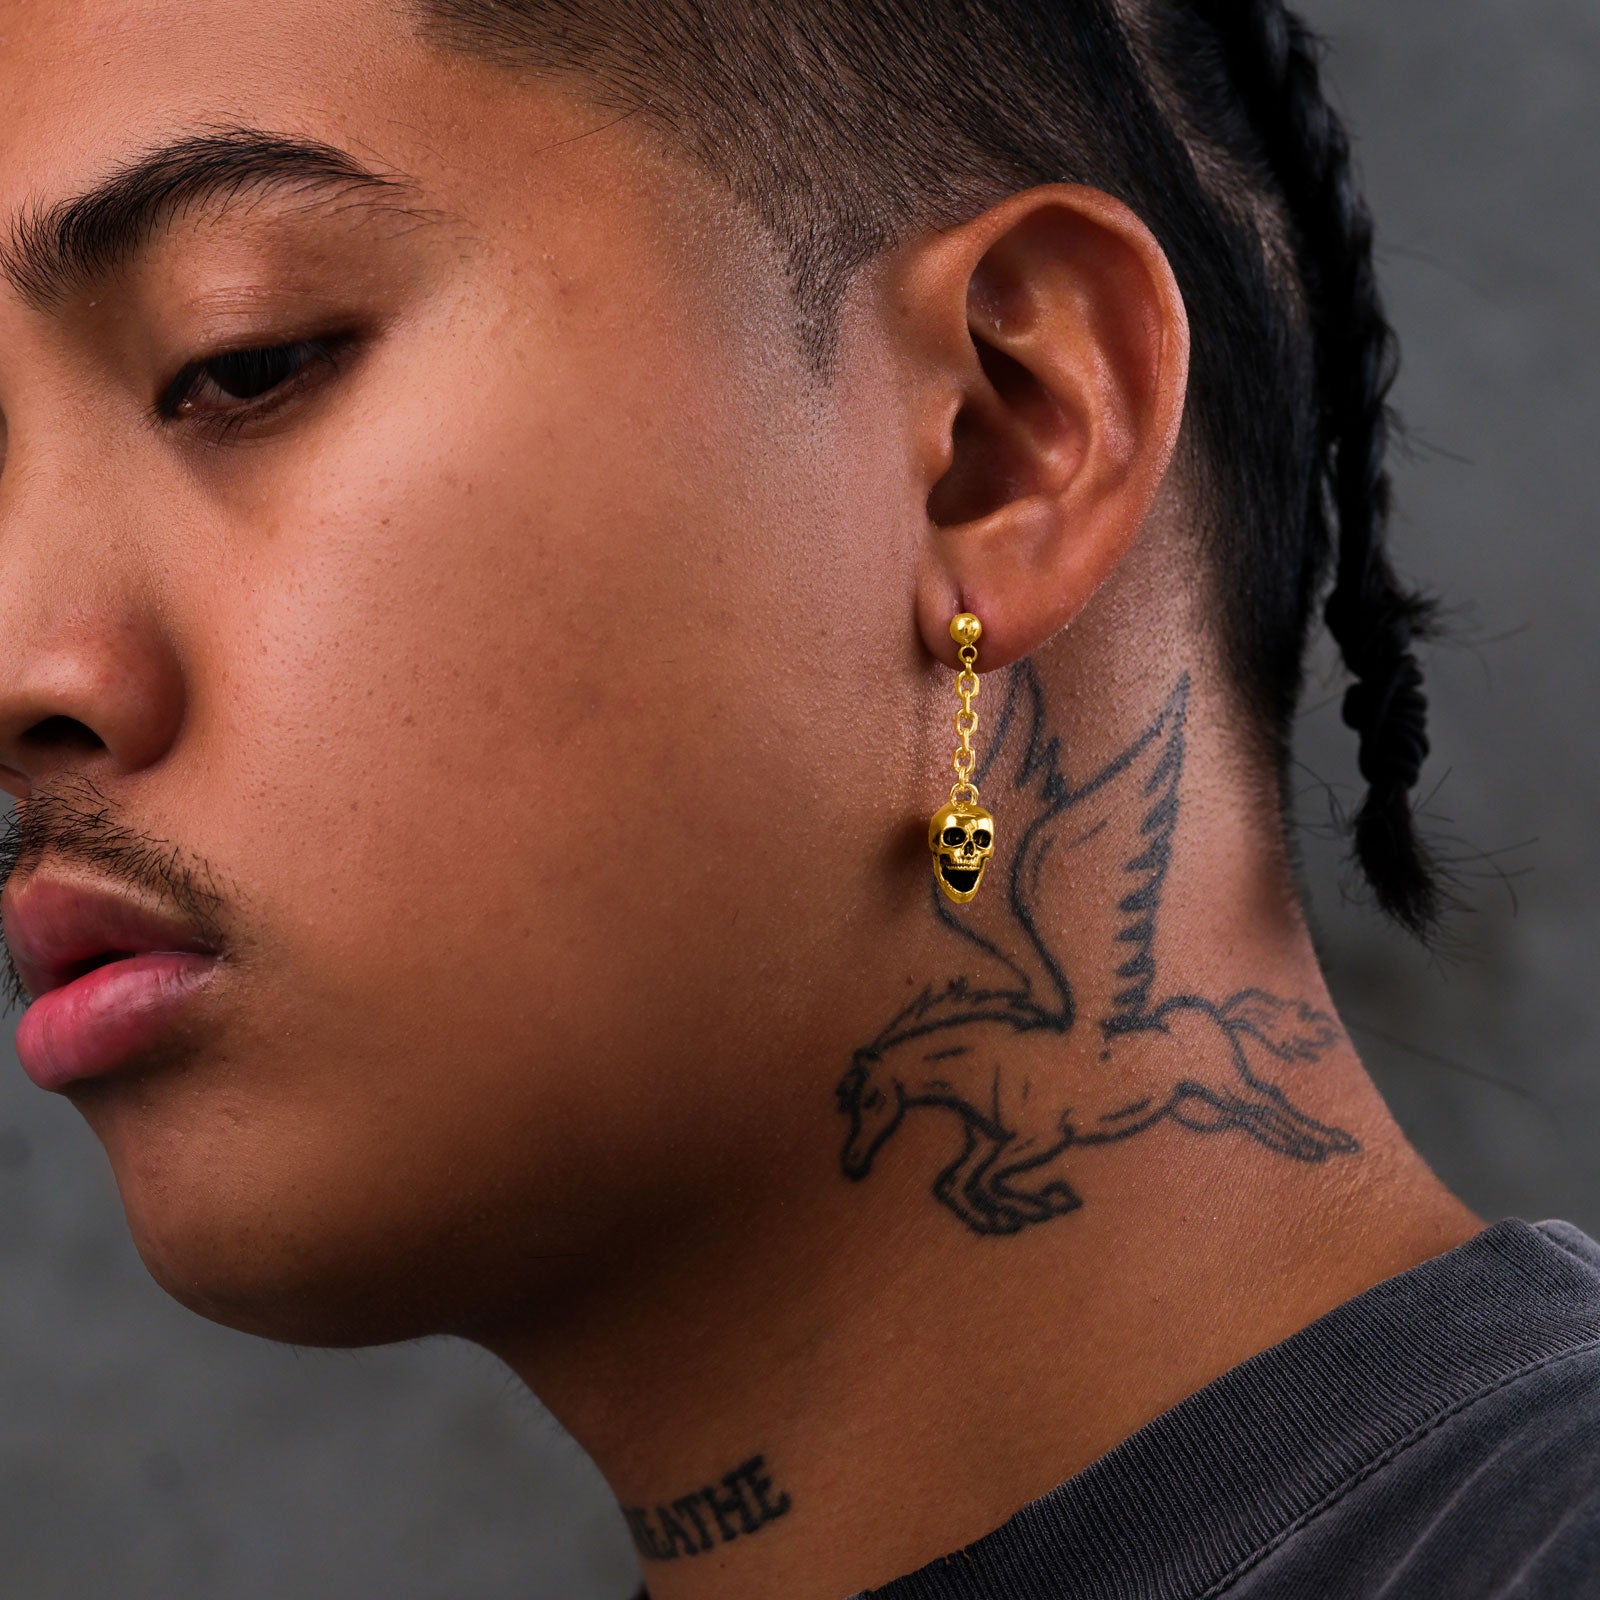 Men's gothic earrings on body with skull charm